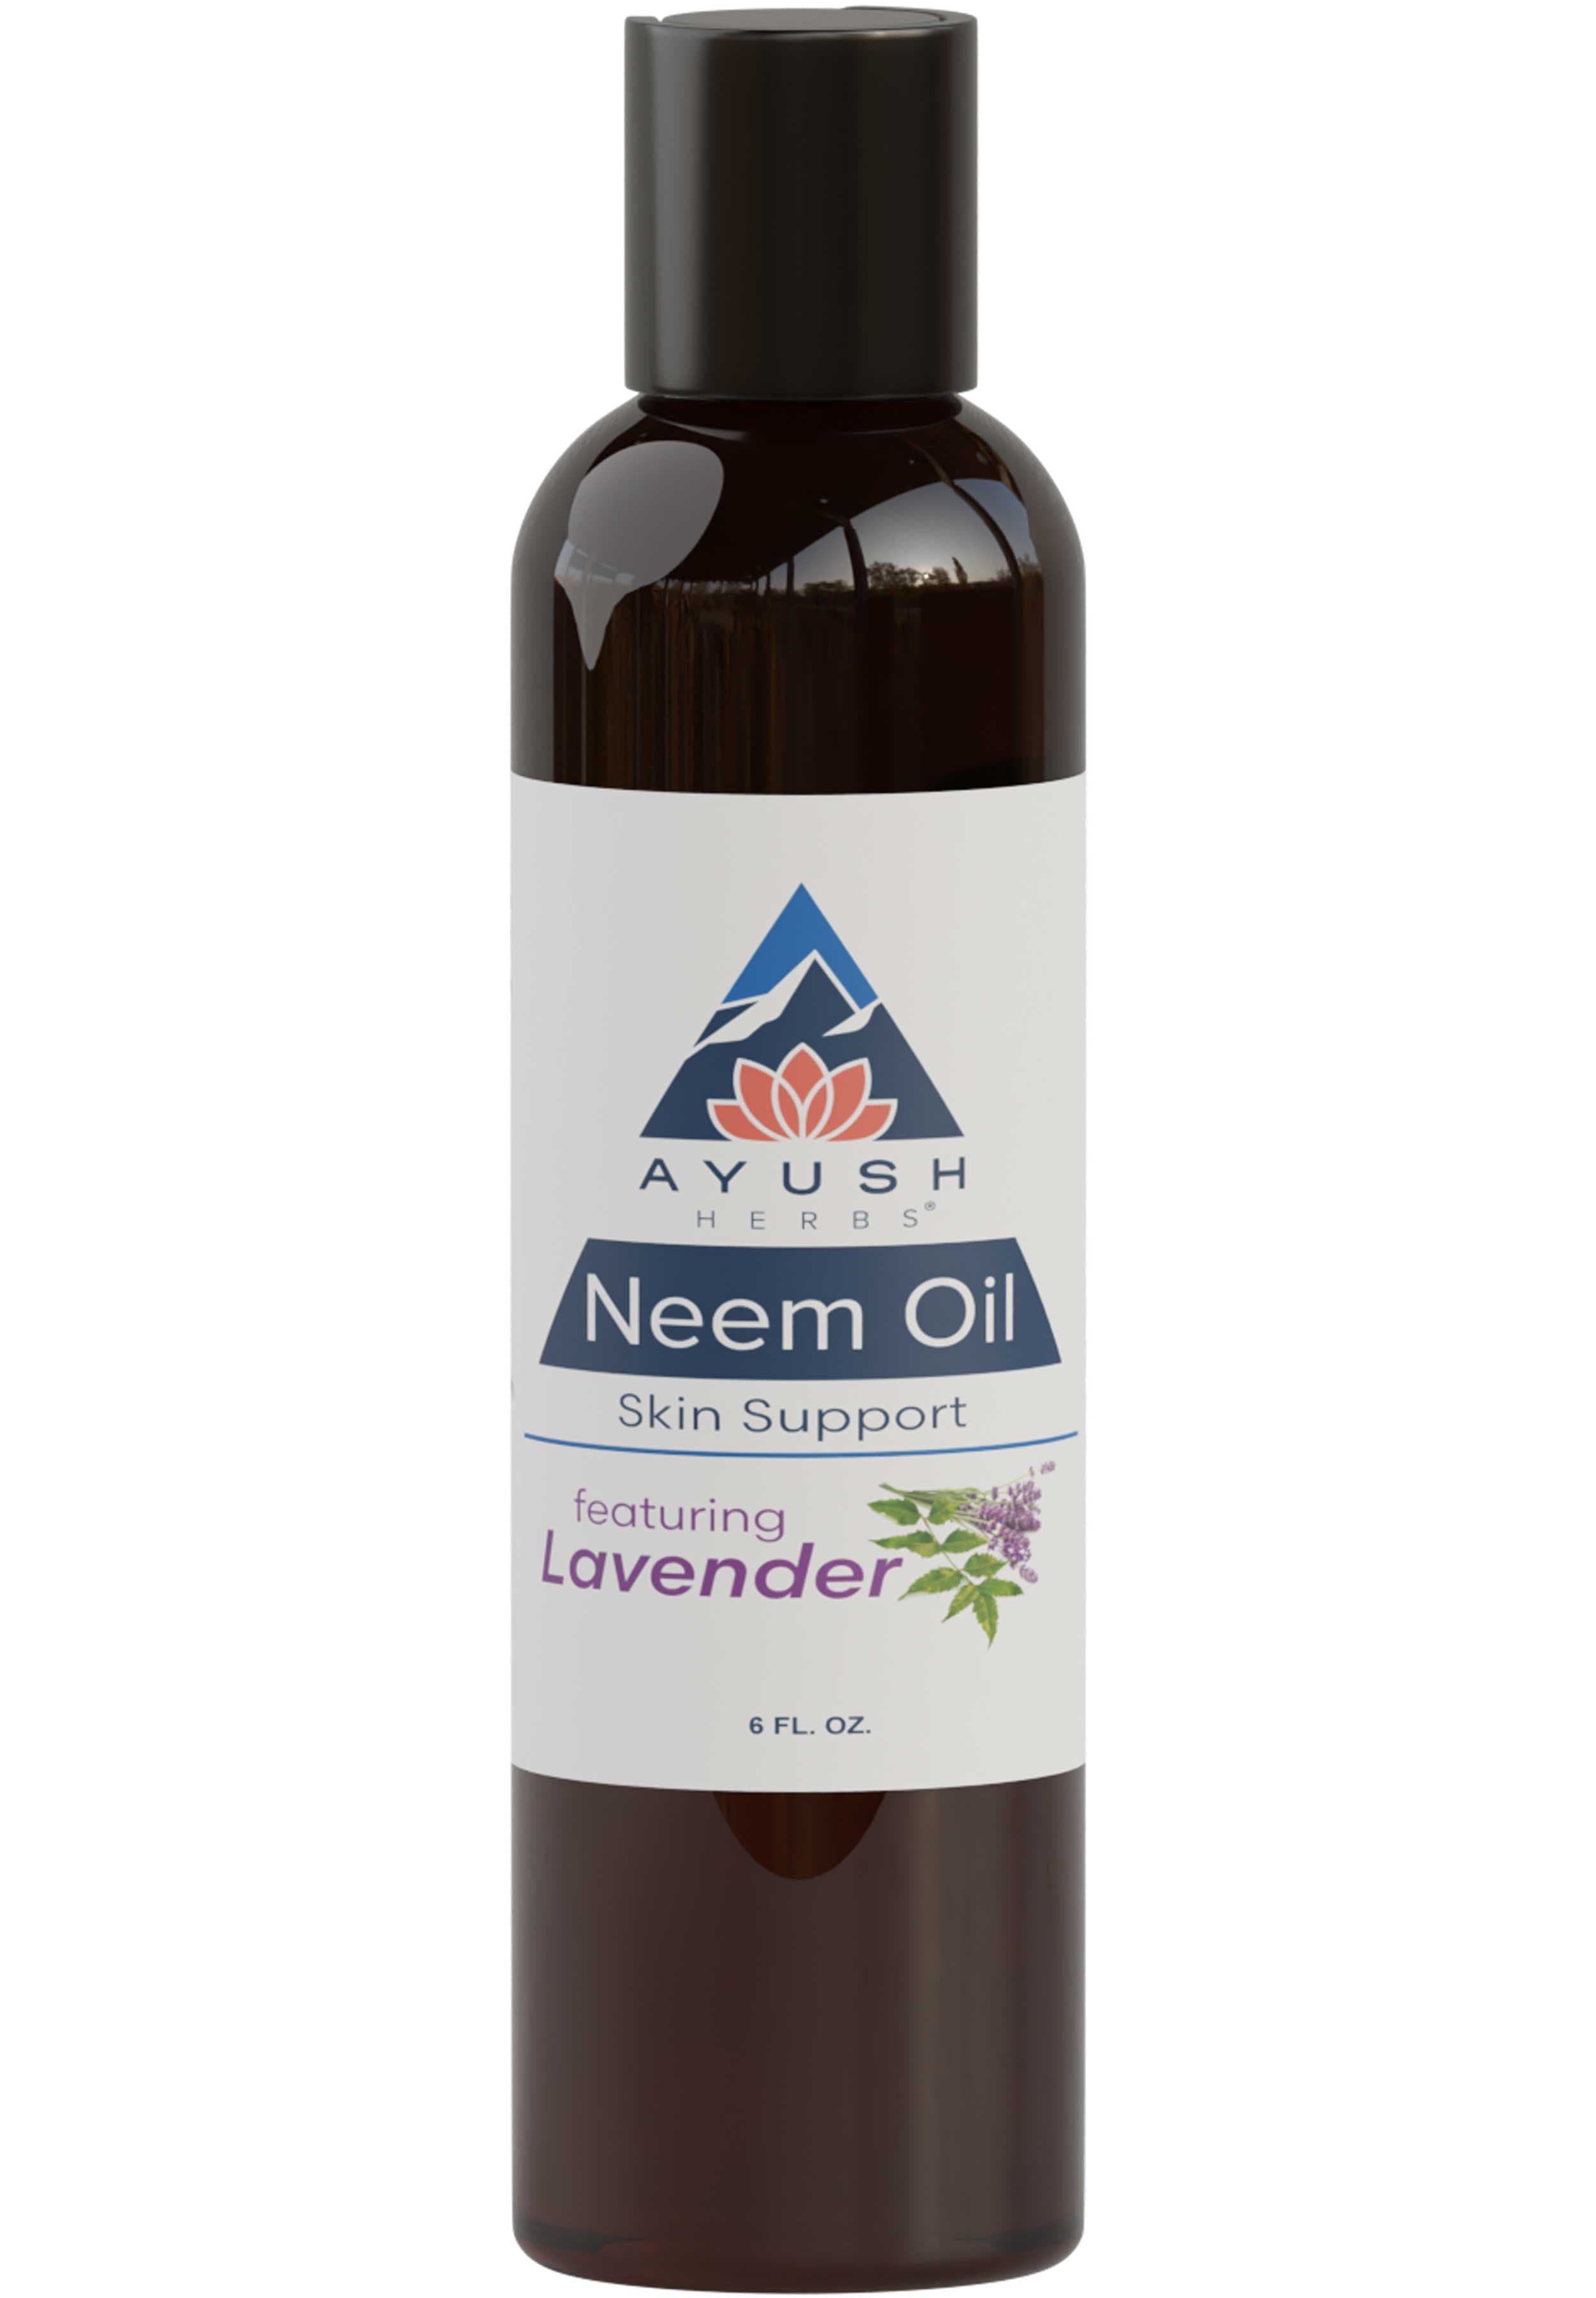 Ayush Herbs Neem Oil